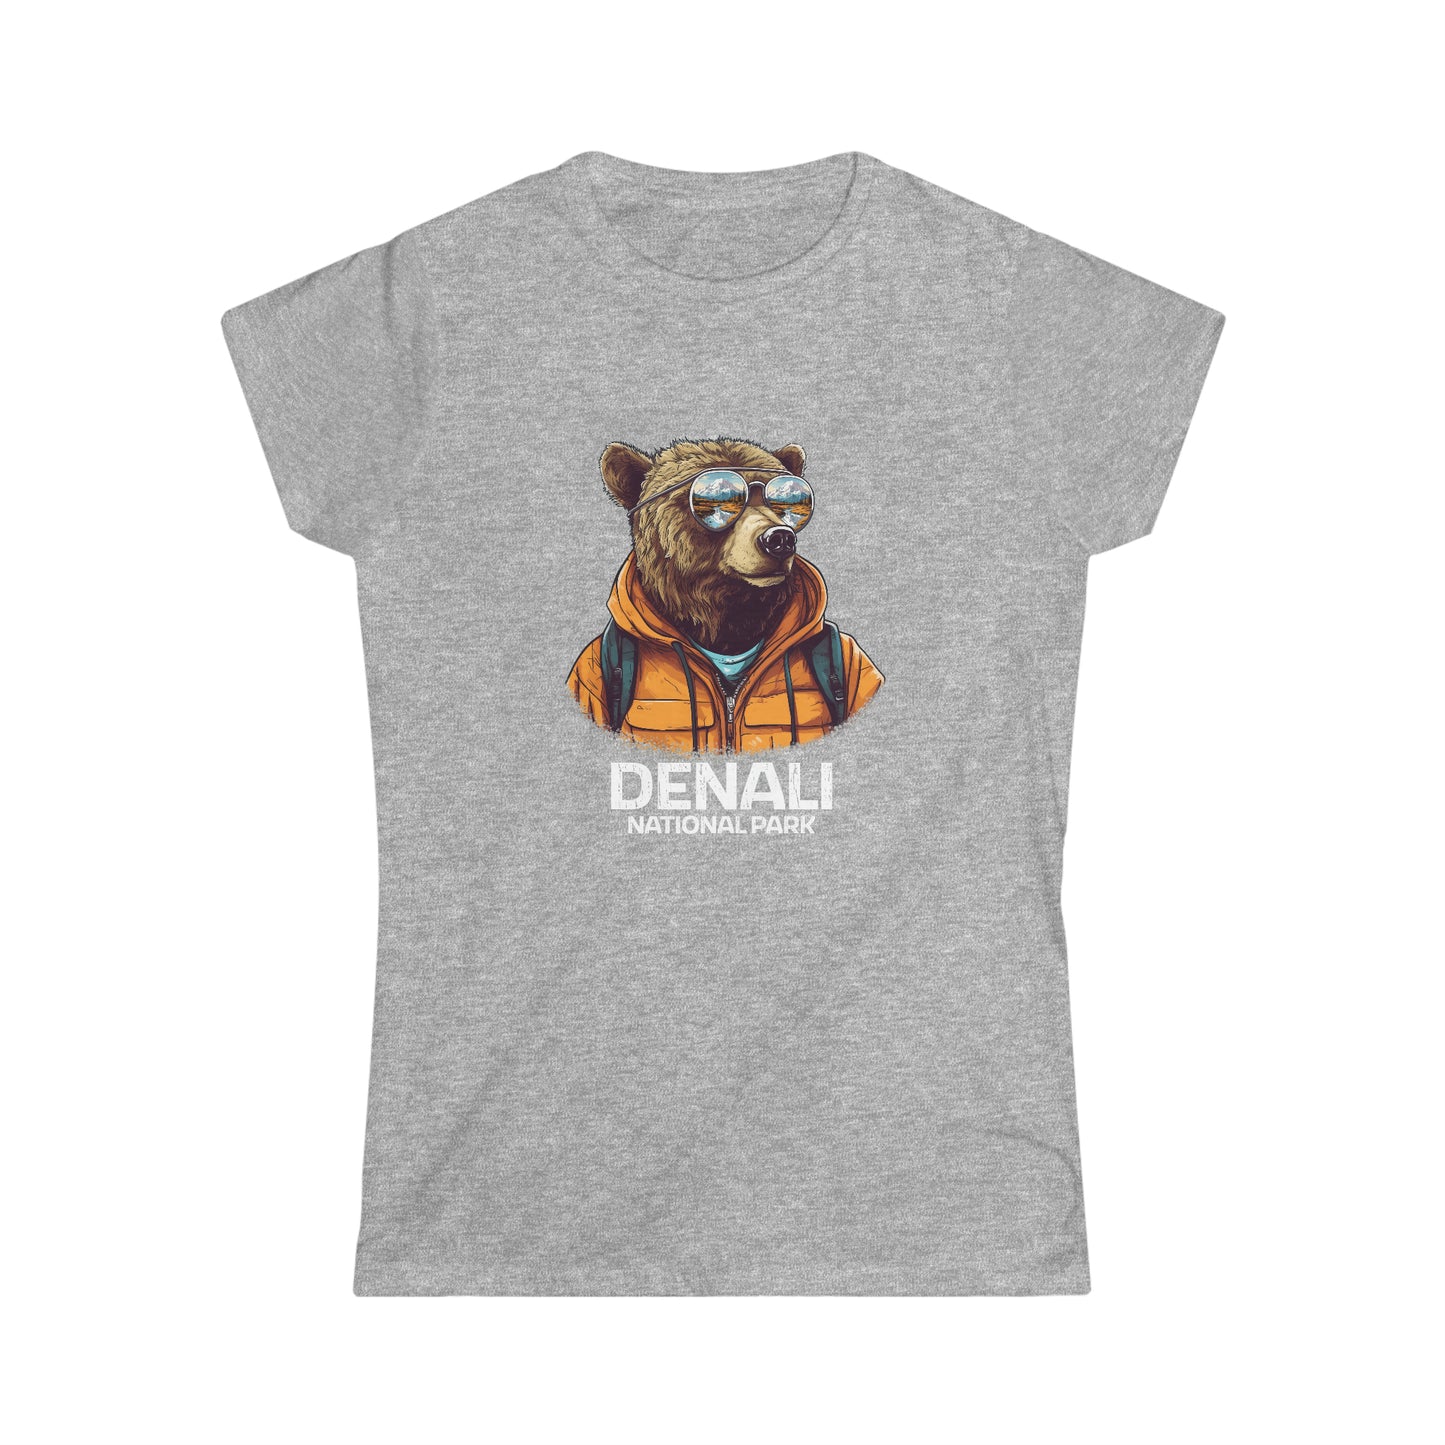 Denali National Park Women's T-Shirt - Cool Grizzly Bear